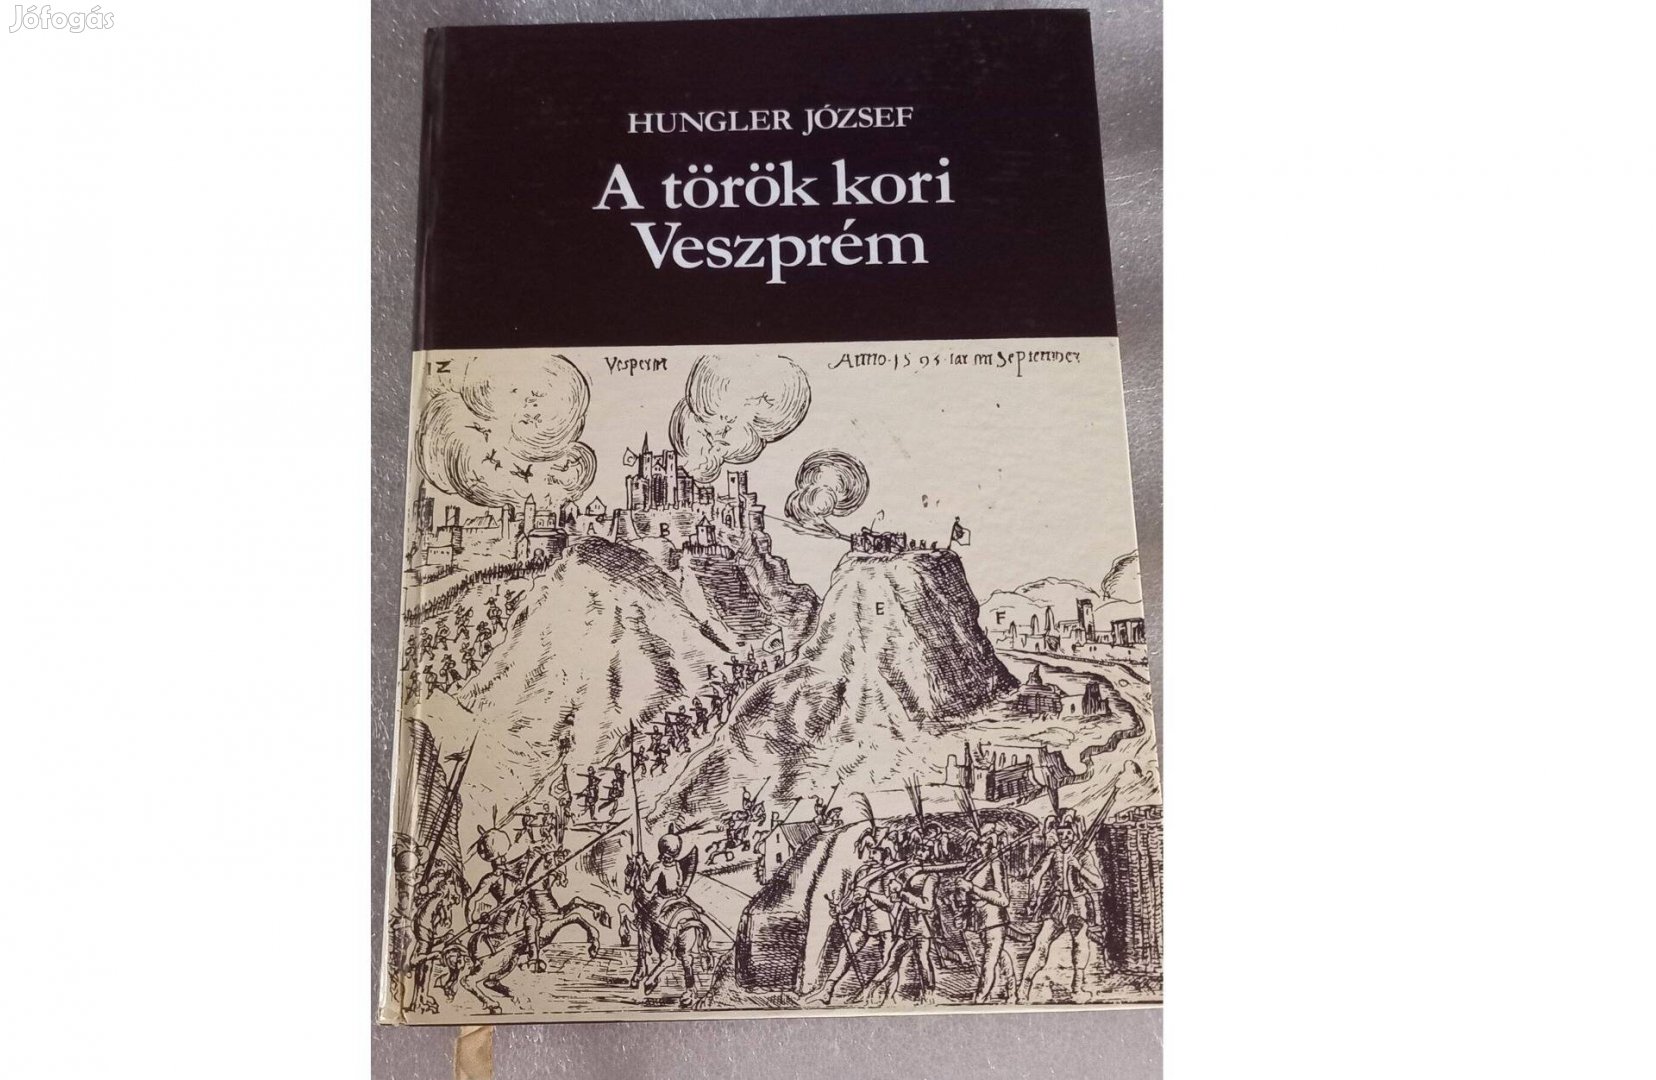 Hungler József A Török kori Veszprém könyv